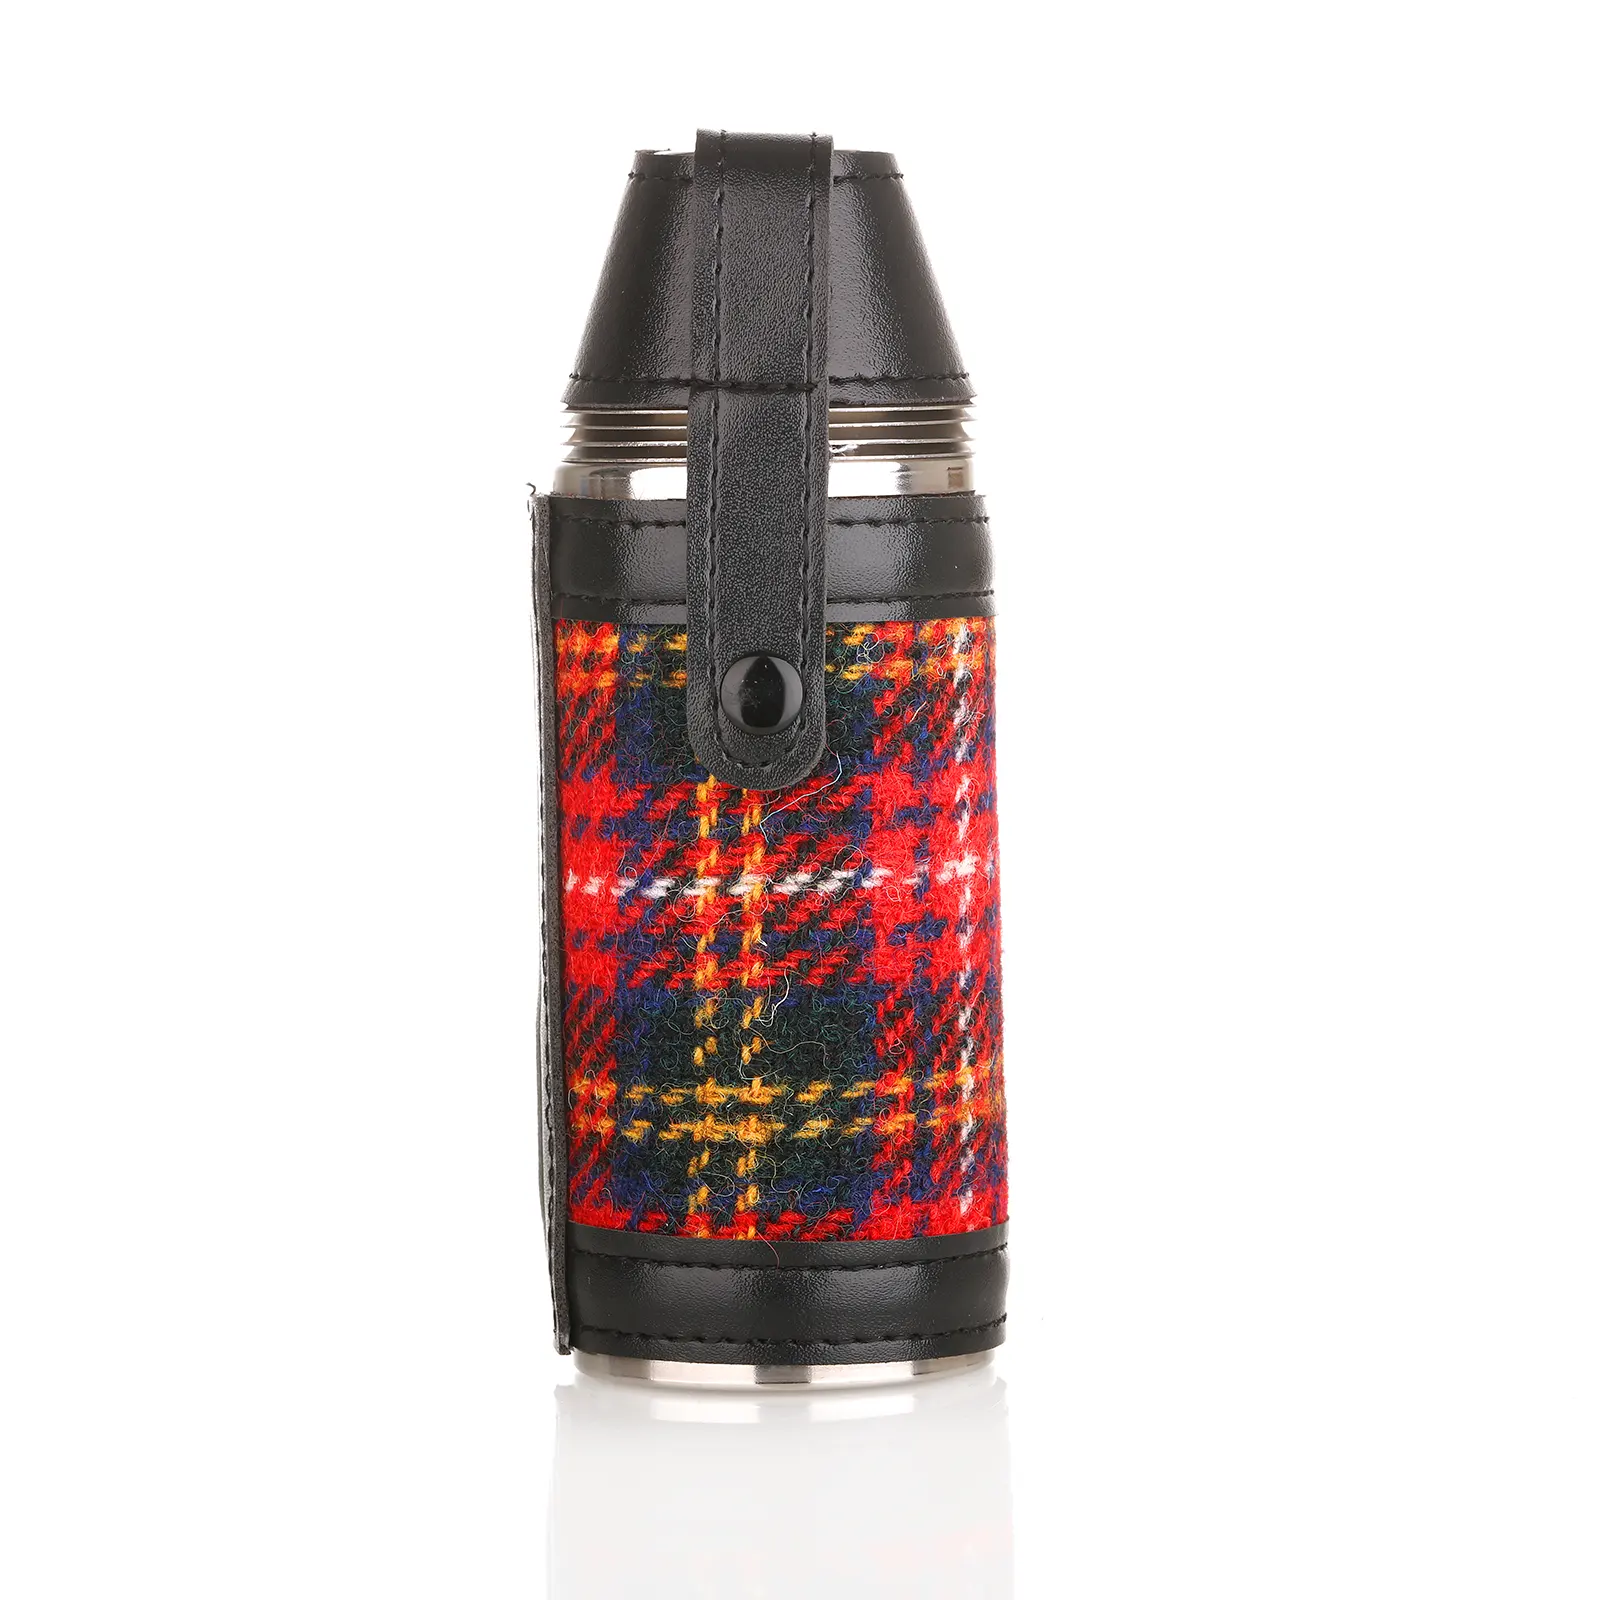 Harris Tweed Hunting Flask / Campingflasche in Royal Stewart Tartan